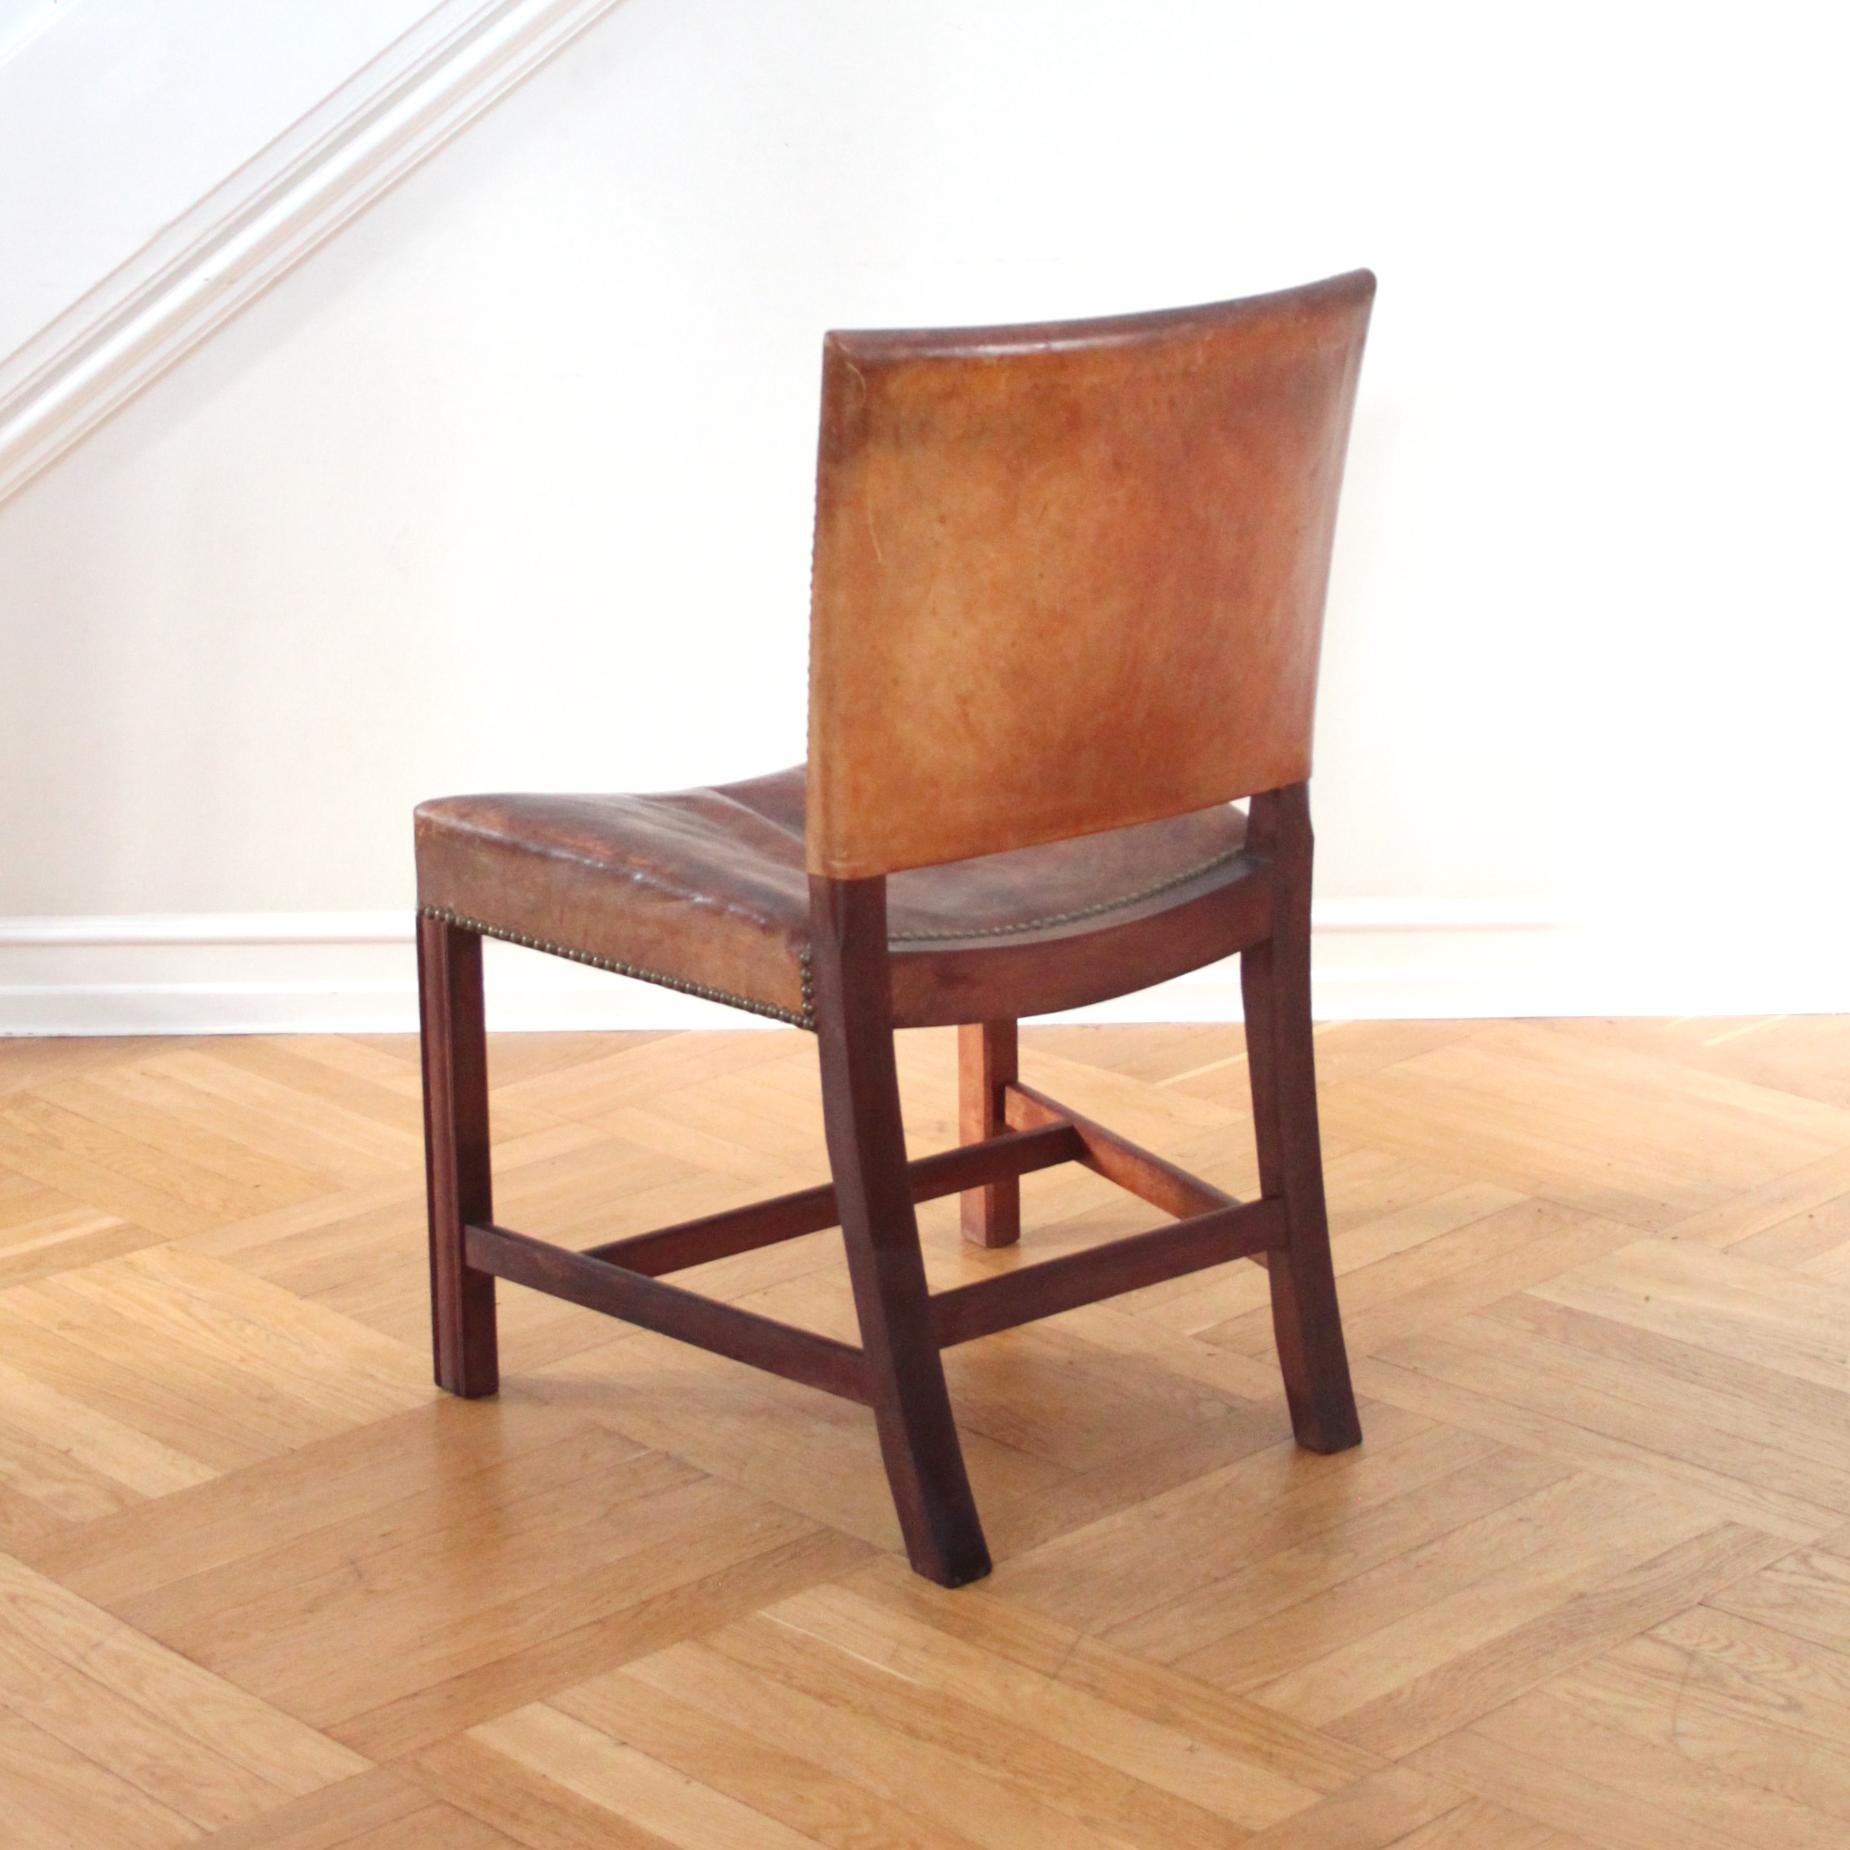 Kaare Klint Roter Stuhl, Rud Rasmussen, Original Niger Leder und Mahagoni-Rahmen (Dänisch) im Angebot